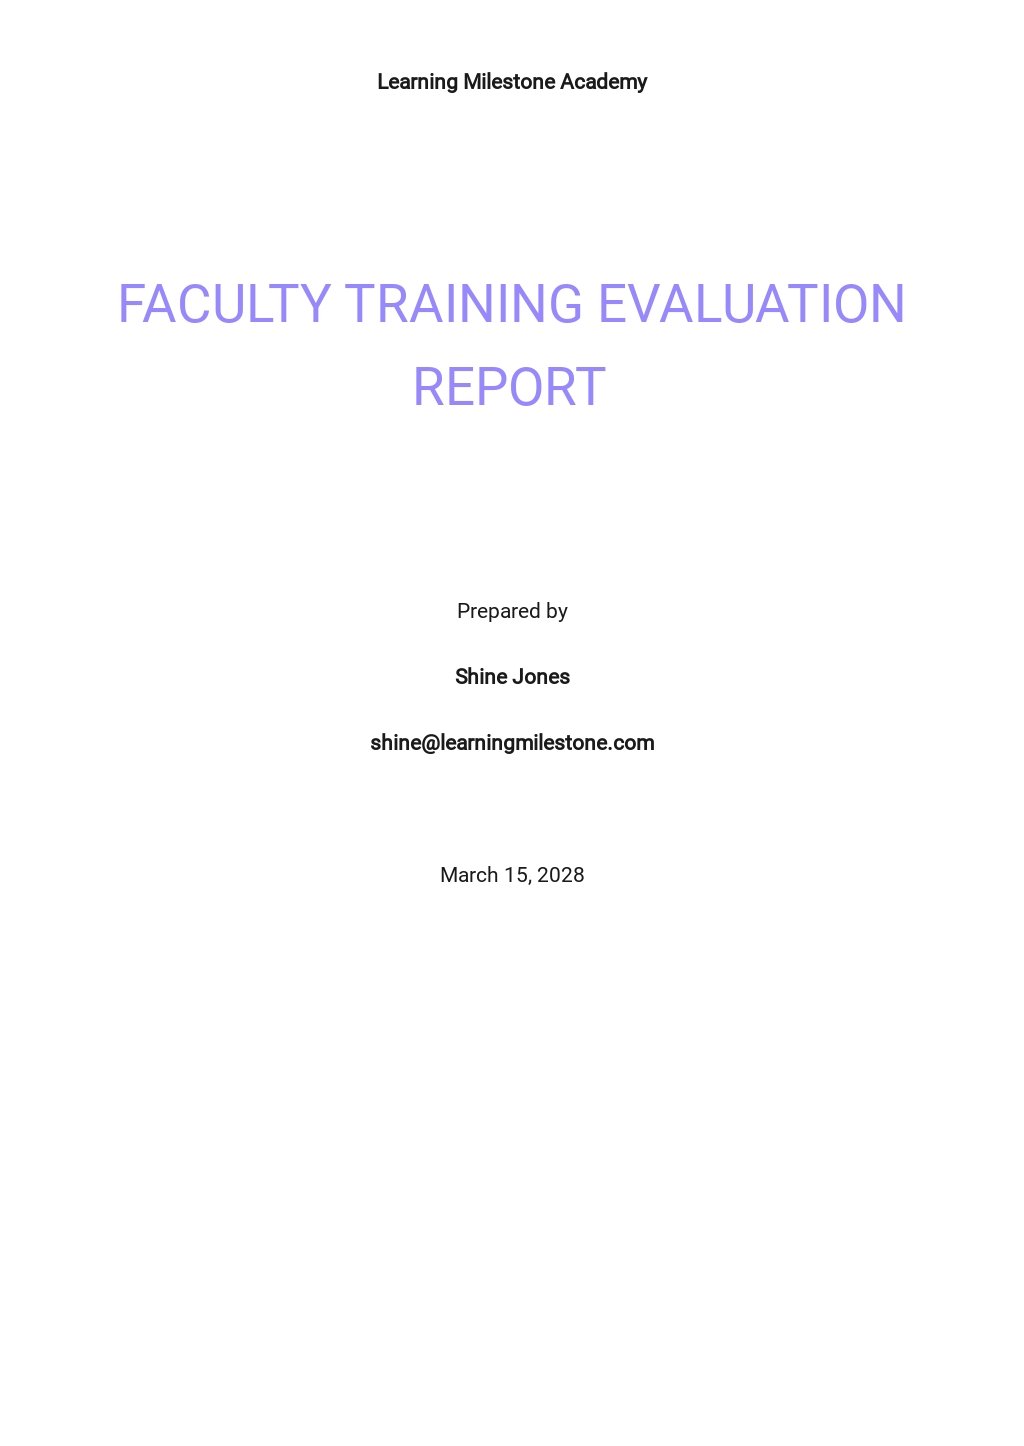 Training Evaluation Report Template - Google Docs, Word  Template.net Inside Training Evaluation Report Template